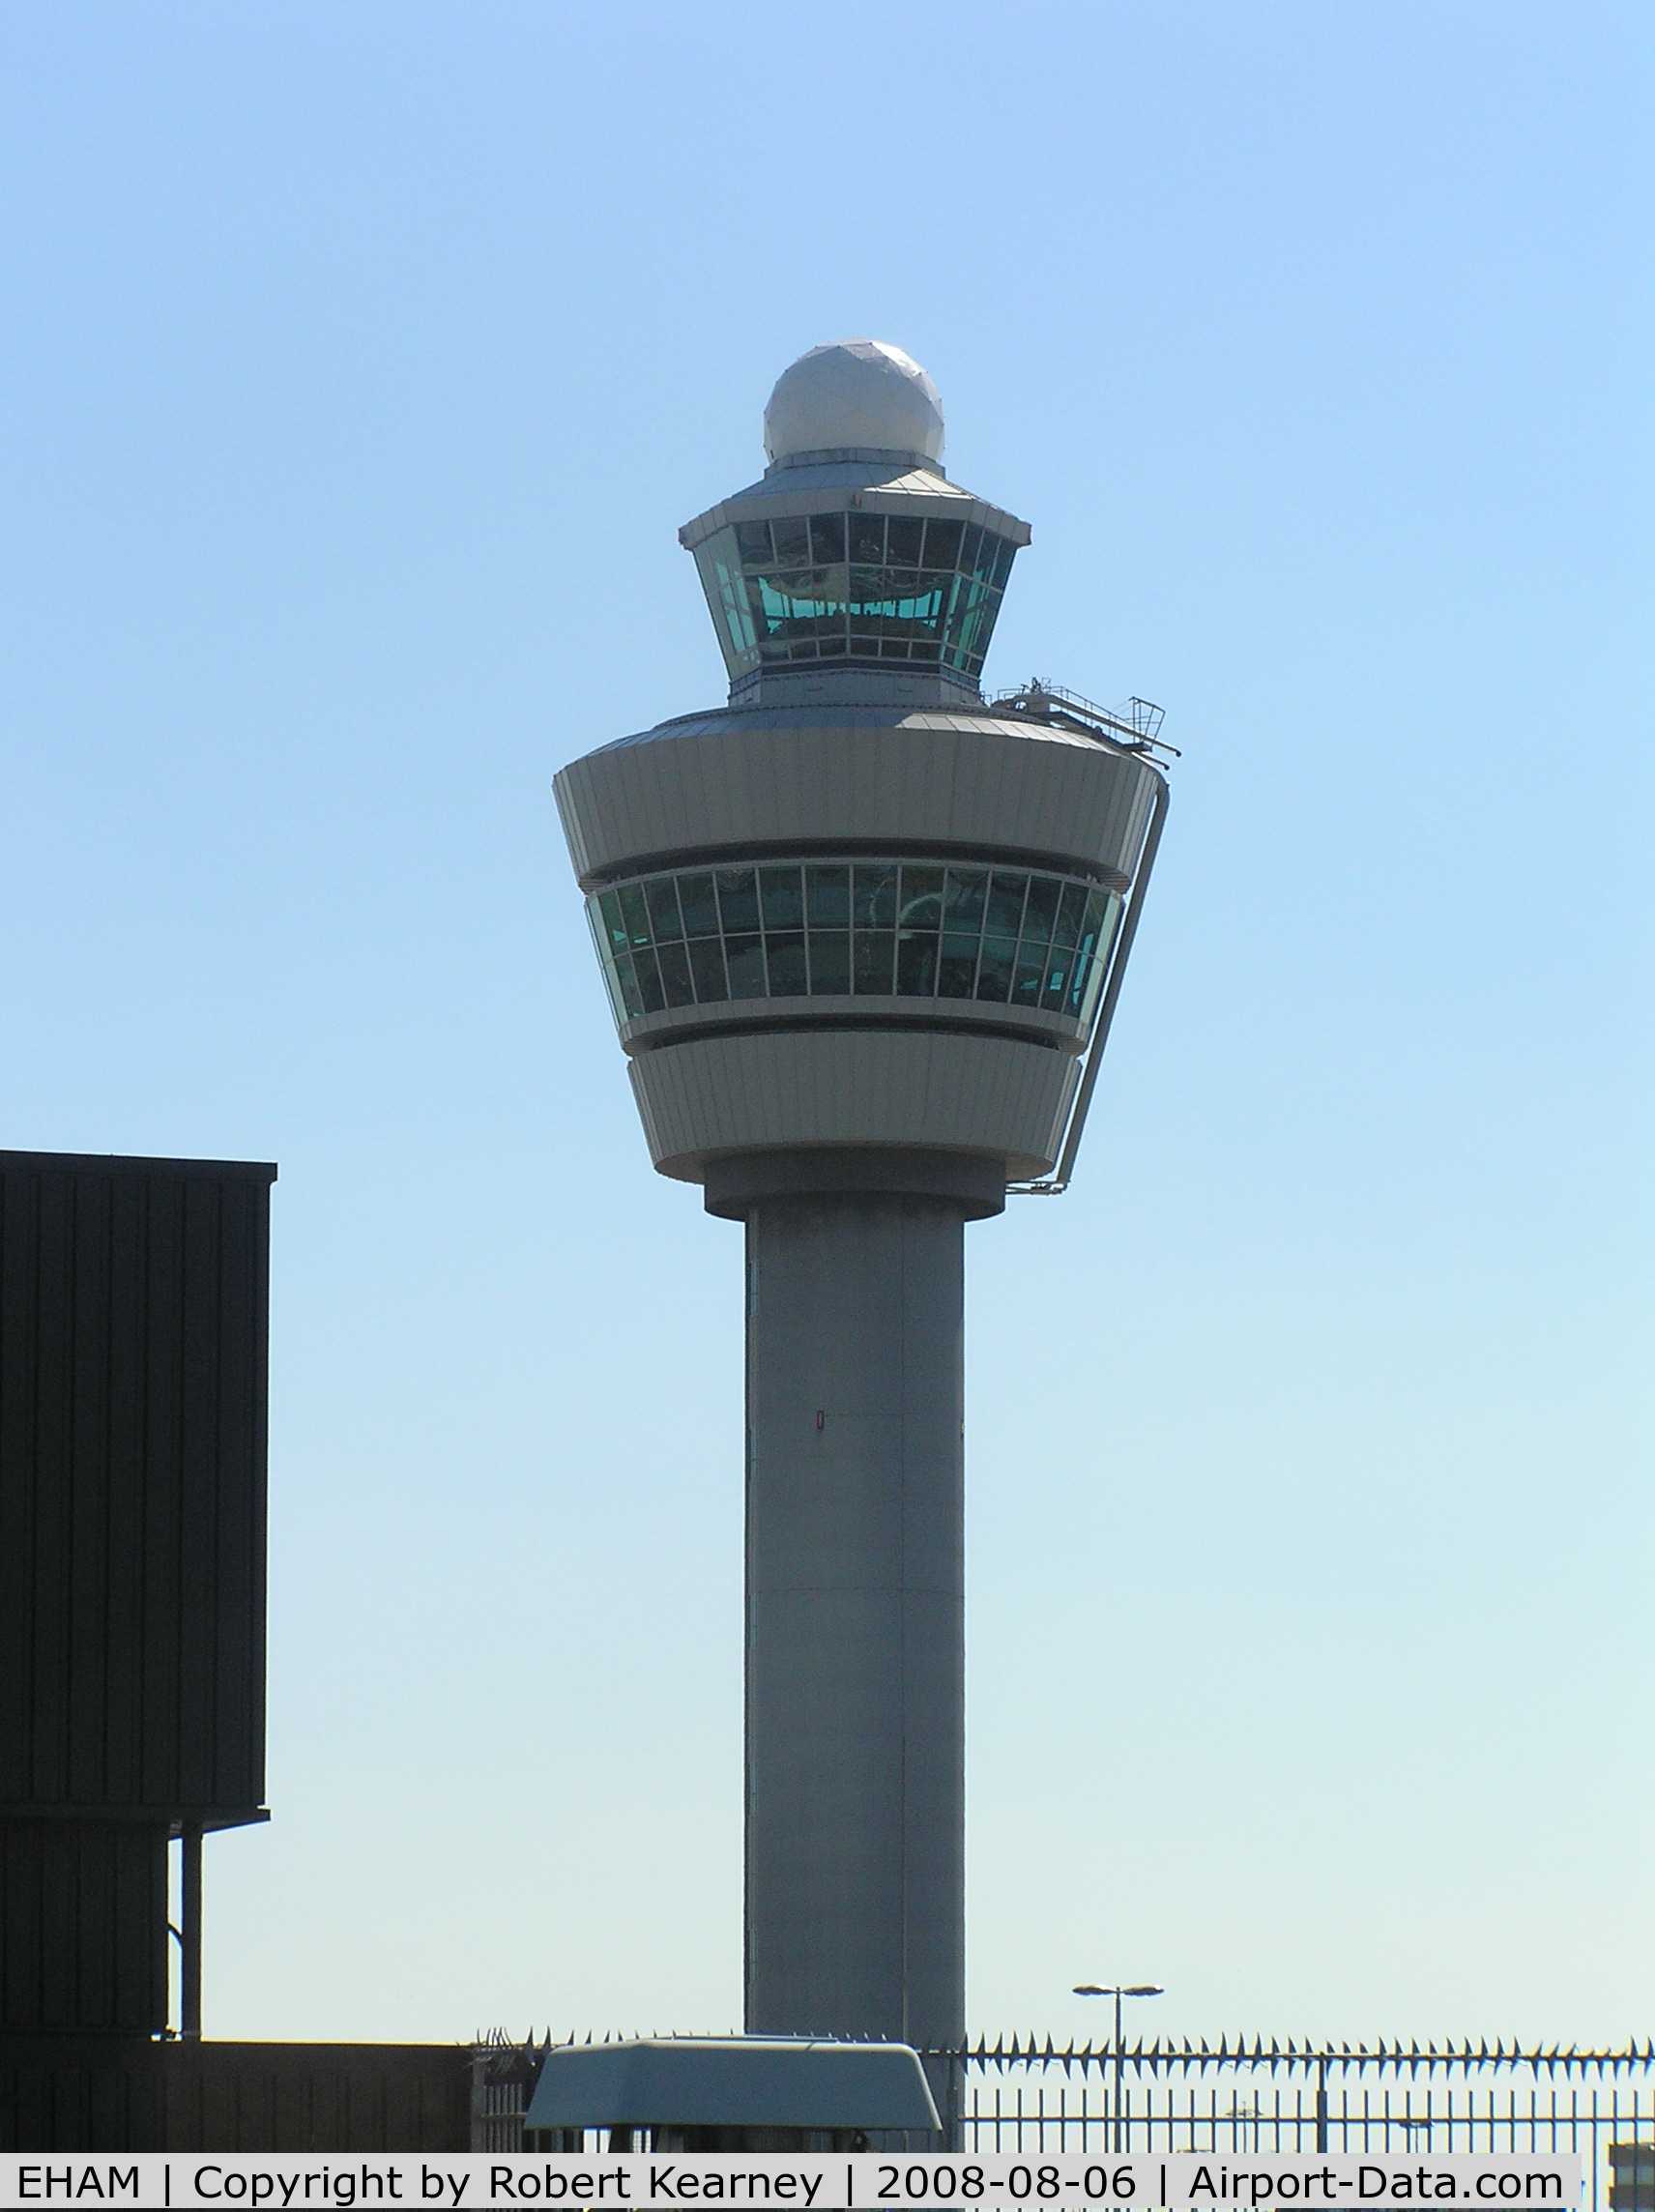 Amsterdam Schiphol Airport, Haarlemmermeer, near Amsterdam Netherlands (EHAM) - Main tower